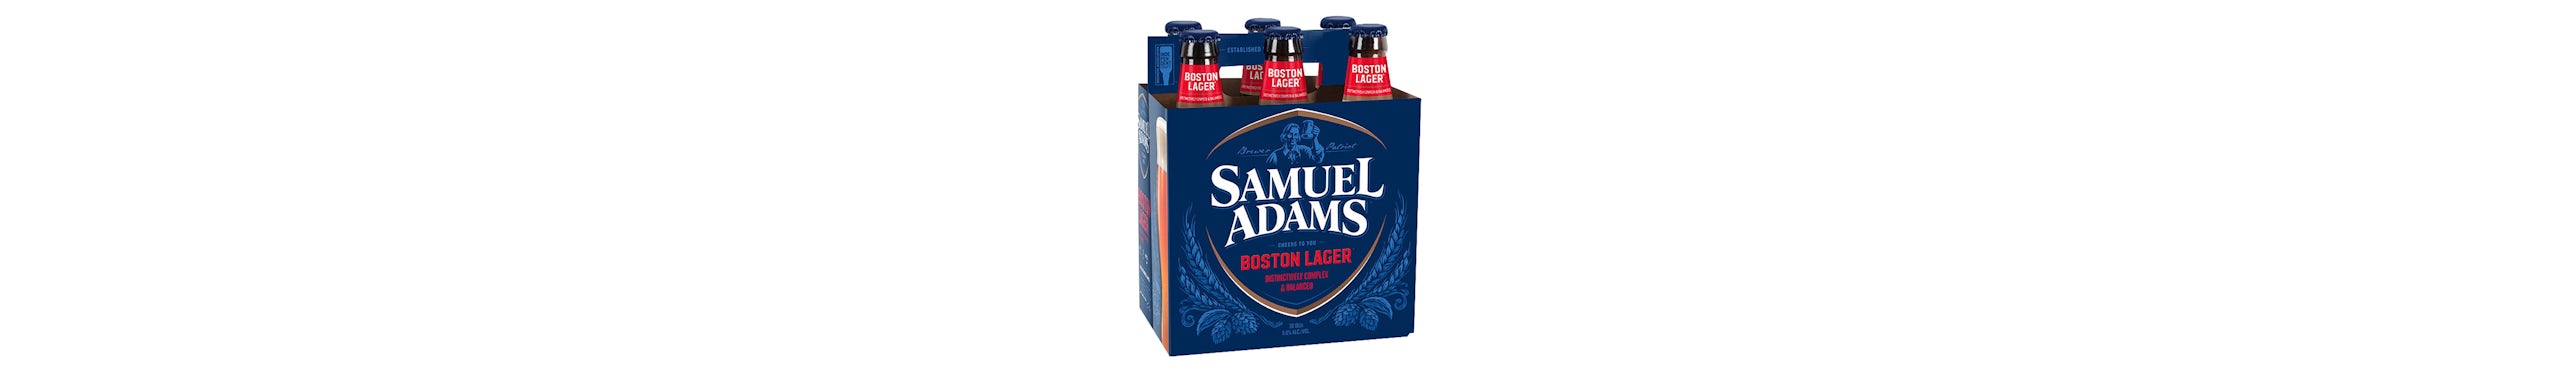 Sam Adams 6 Pack Bottle